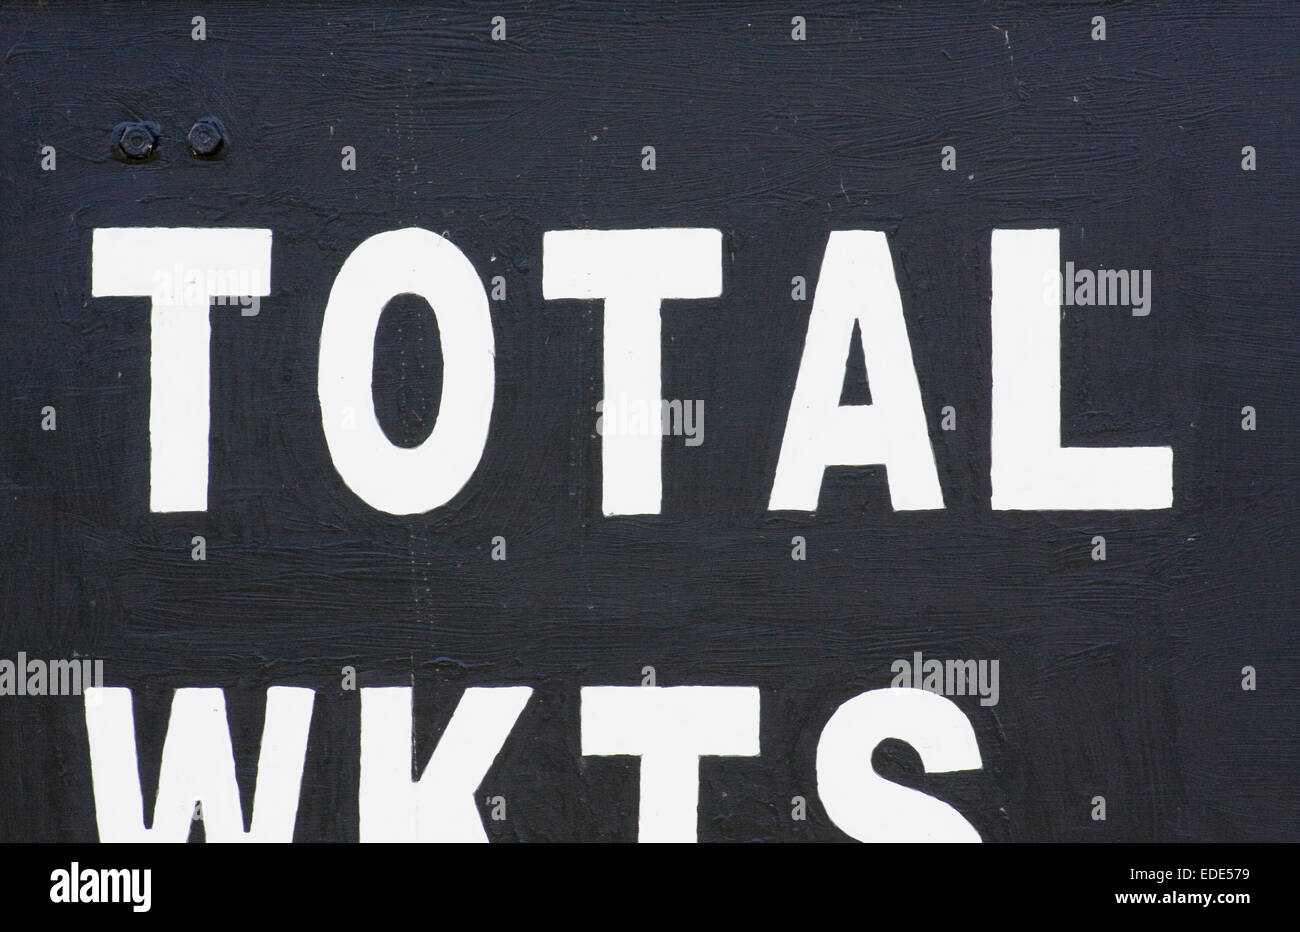 TOTAL on a cricket scoreboard Stock Photo